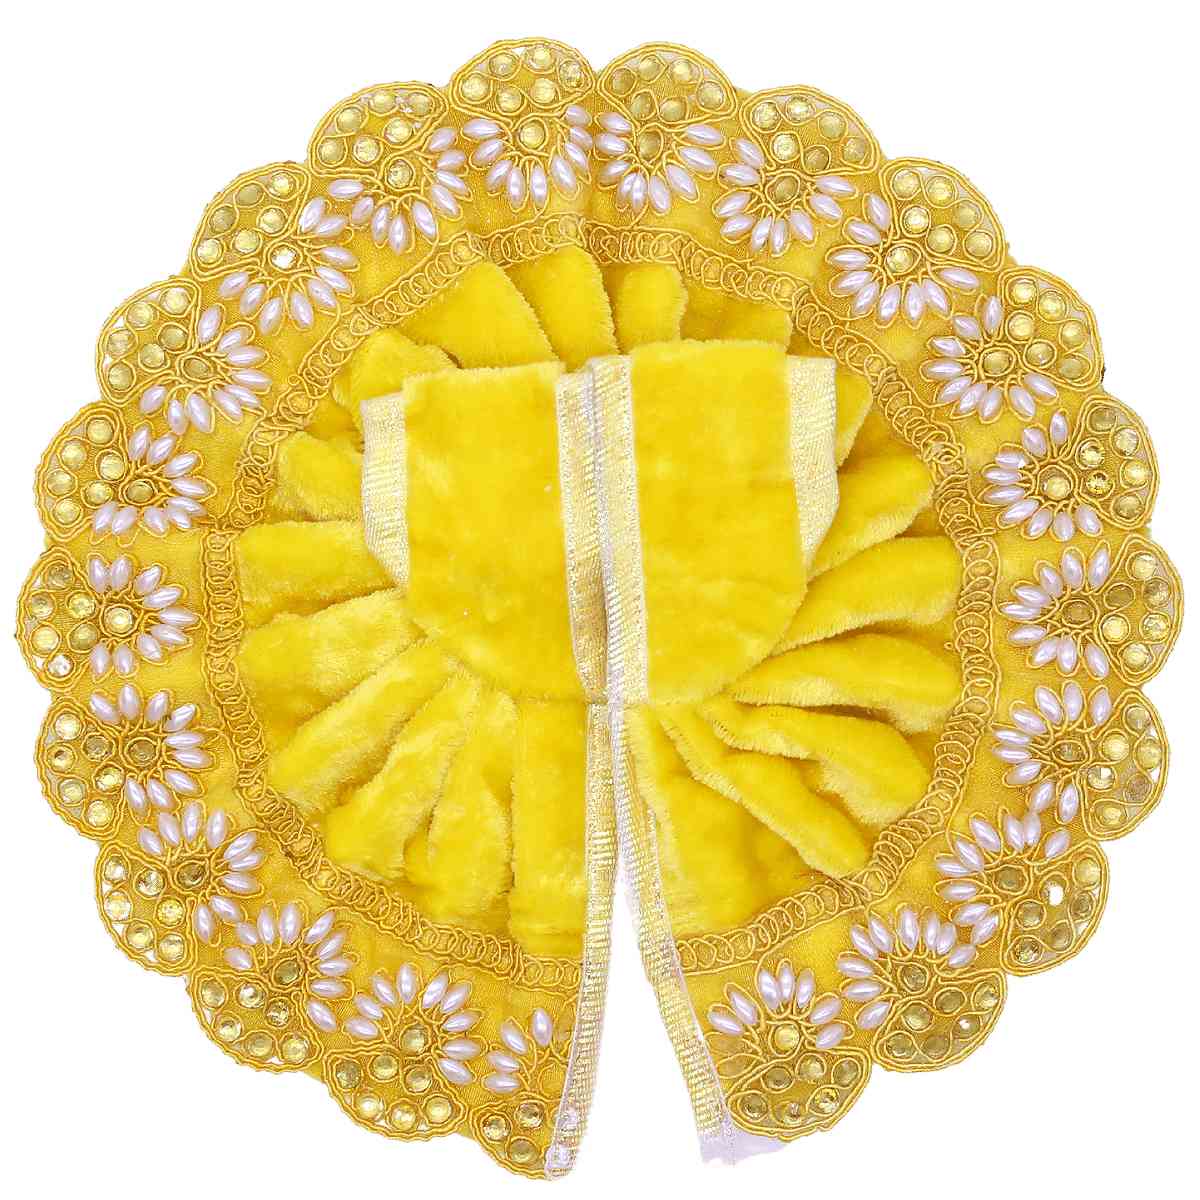 Stone decorated yellow velvet dress for laddu gopal ji